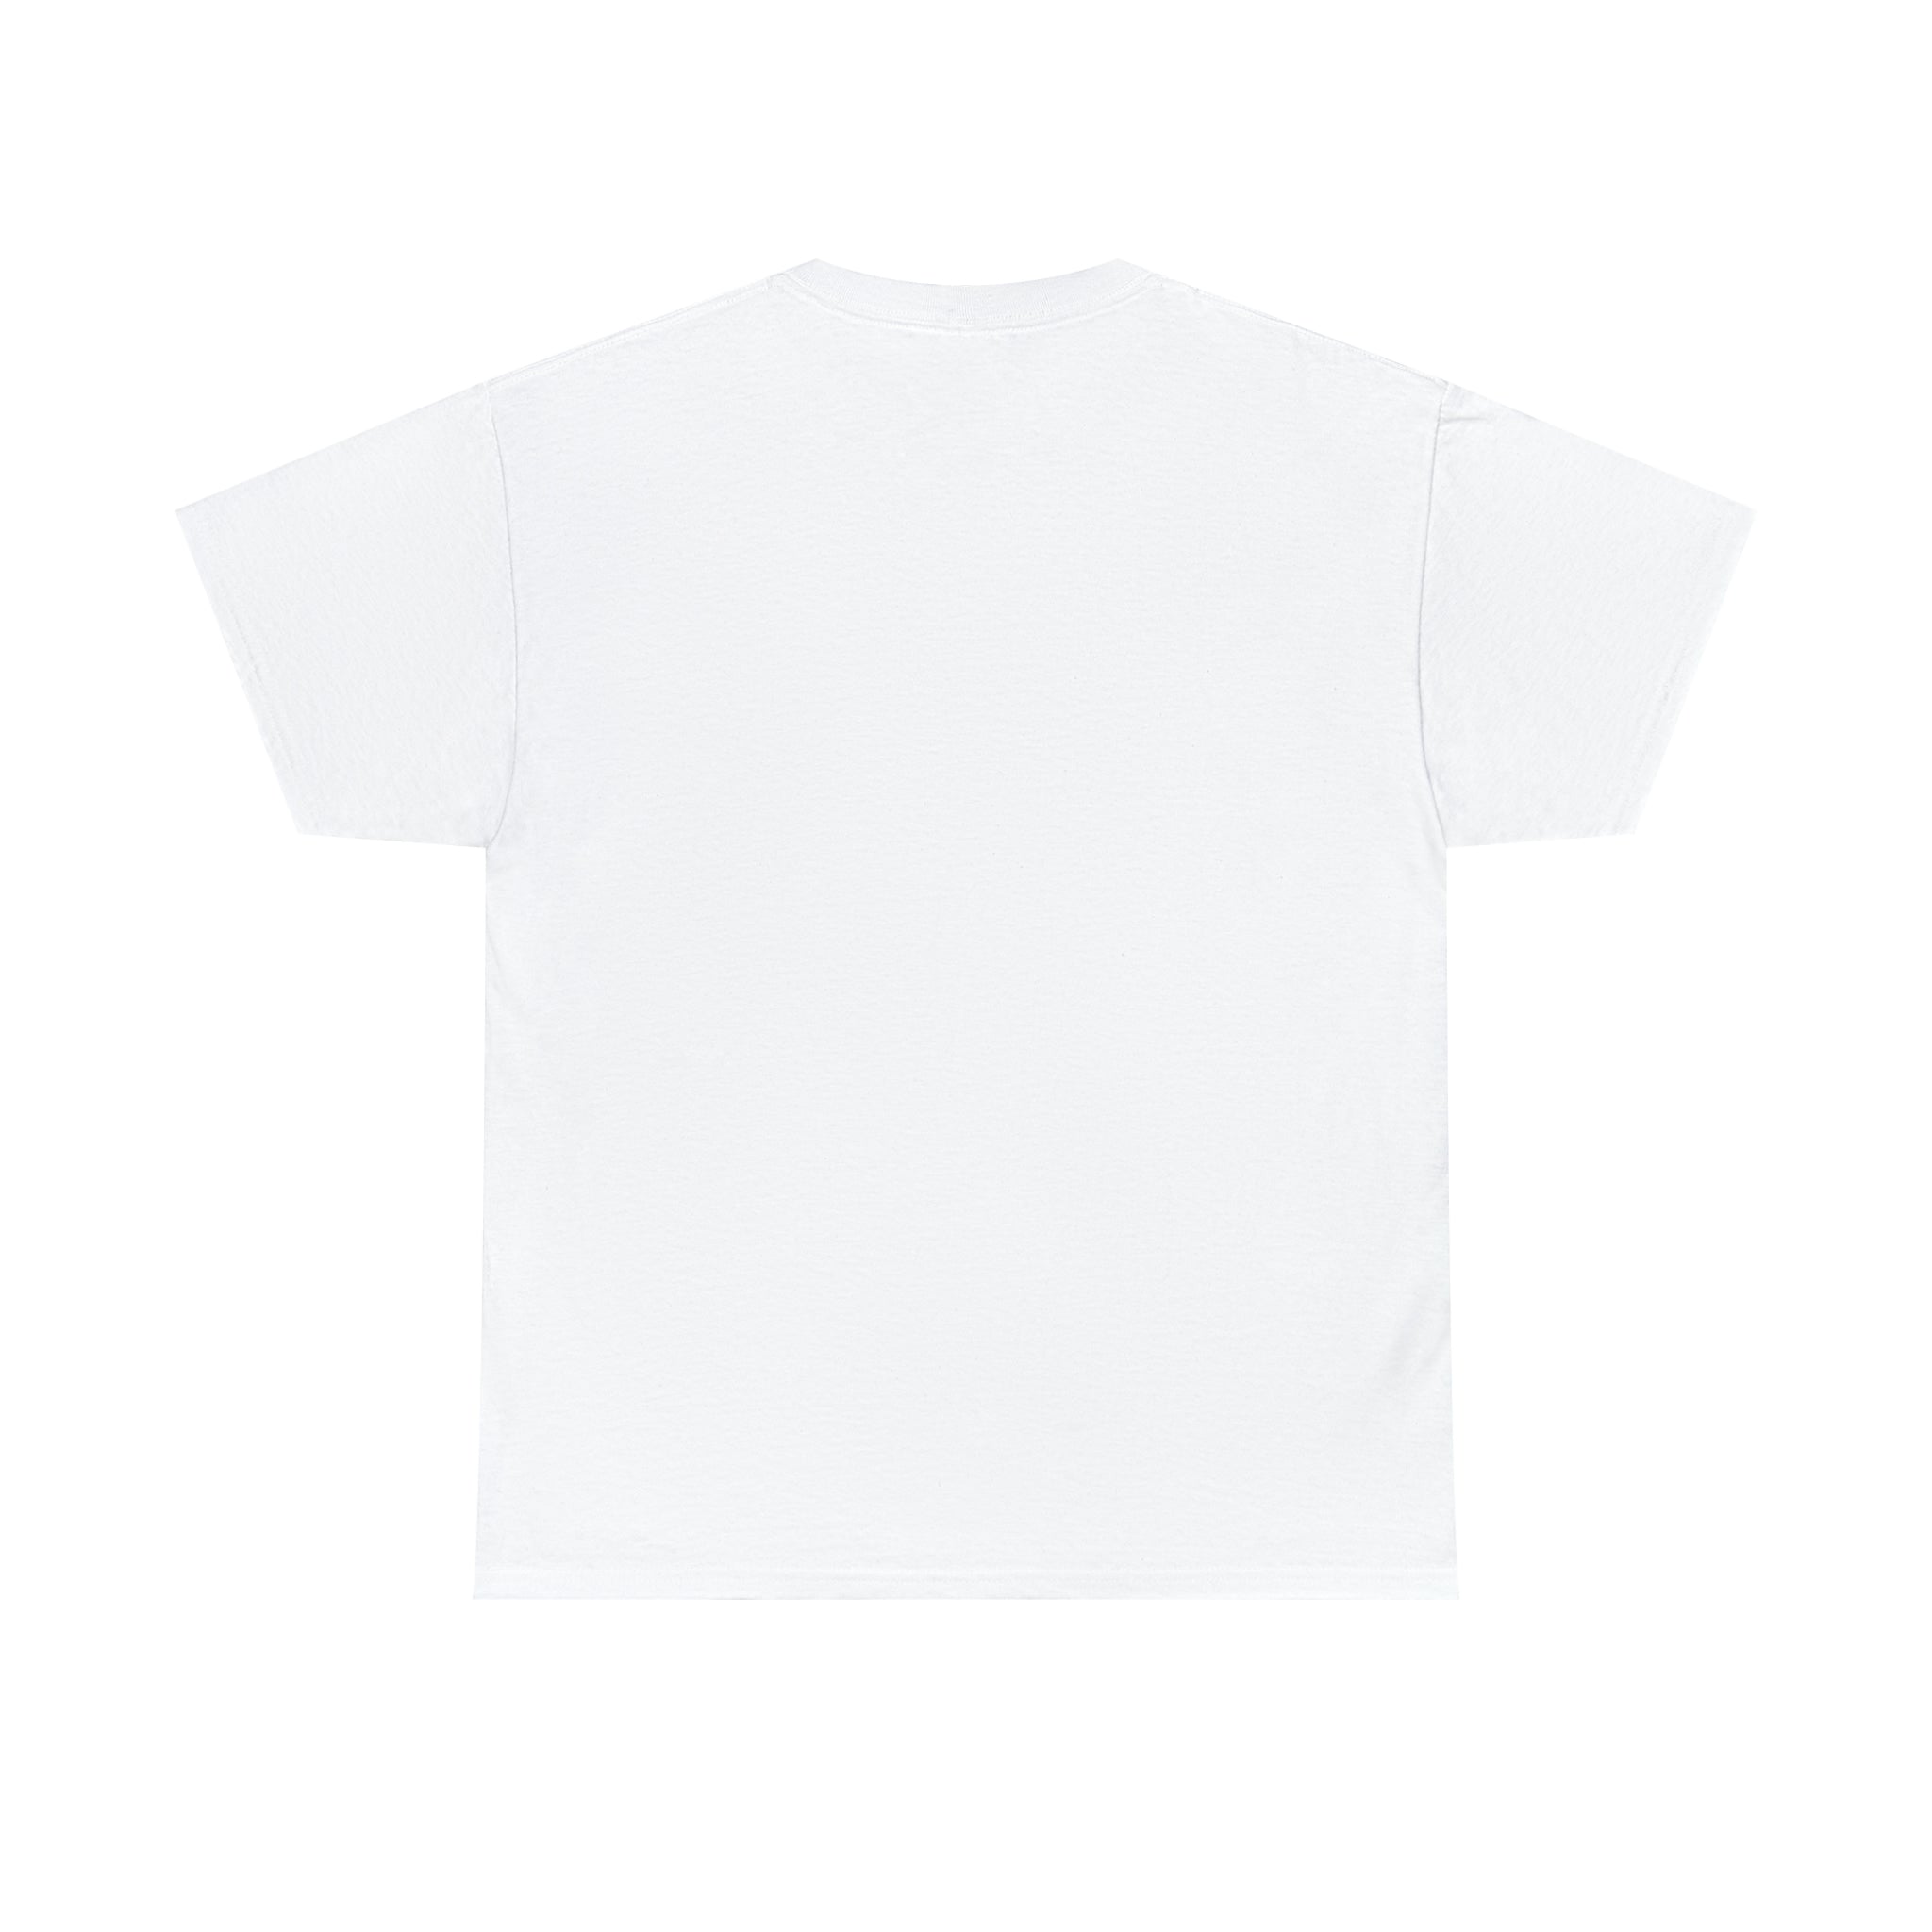 Edgbaston Cricket Ground - Unisex Cotton T-Shirt